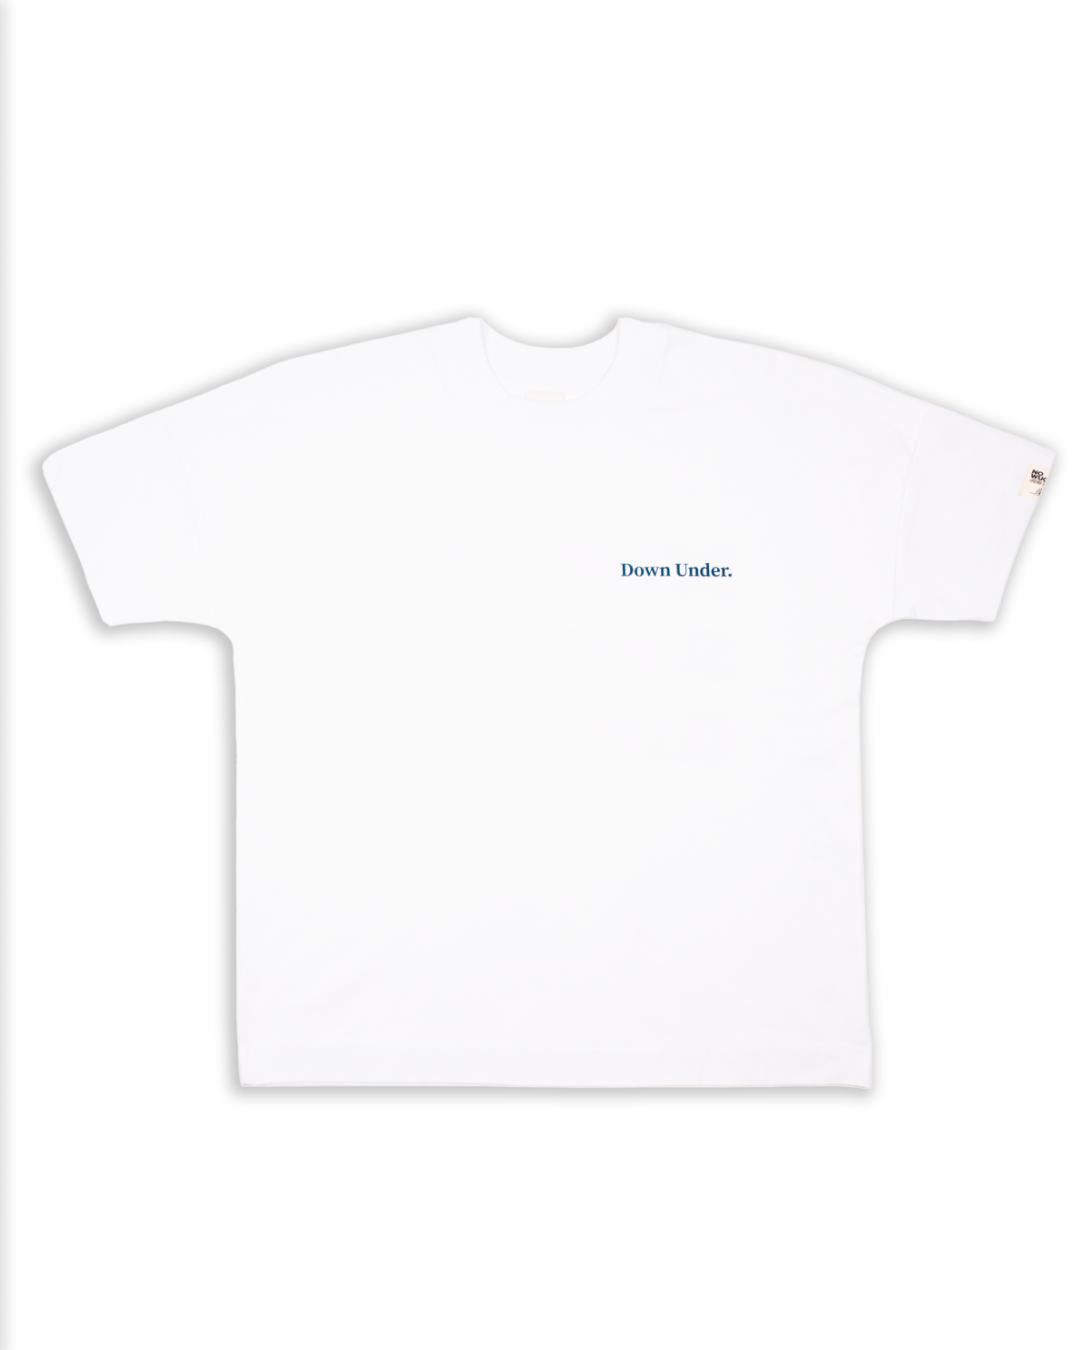 SUMMER CLUB II - Short sleeve T-shirt